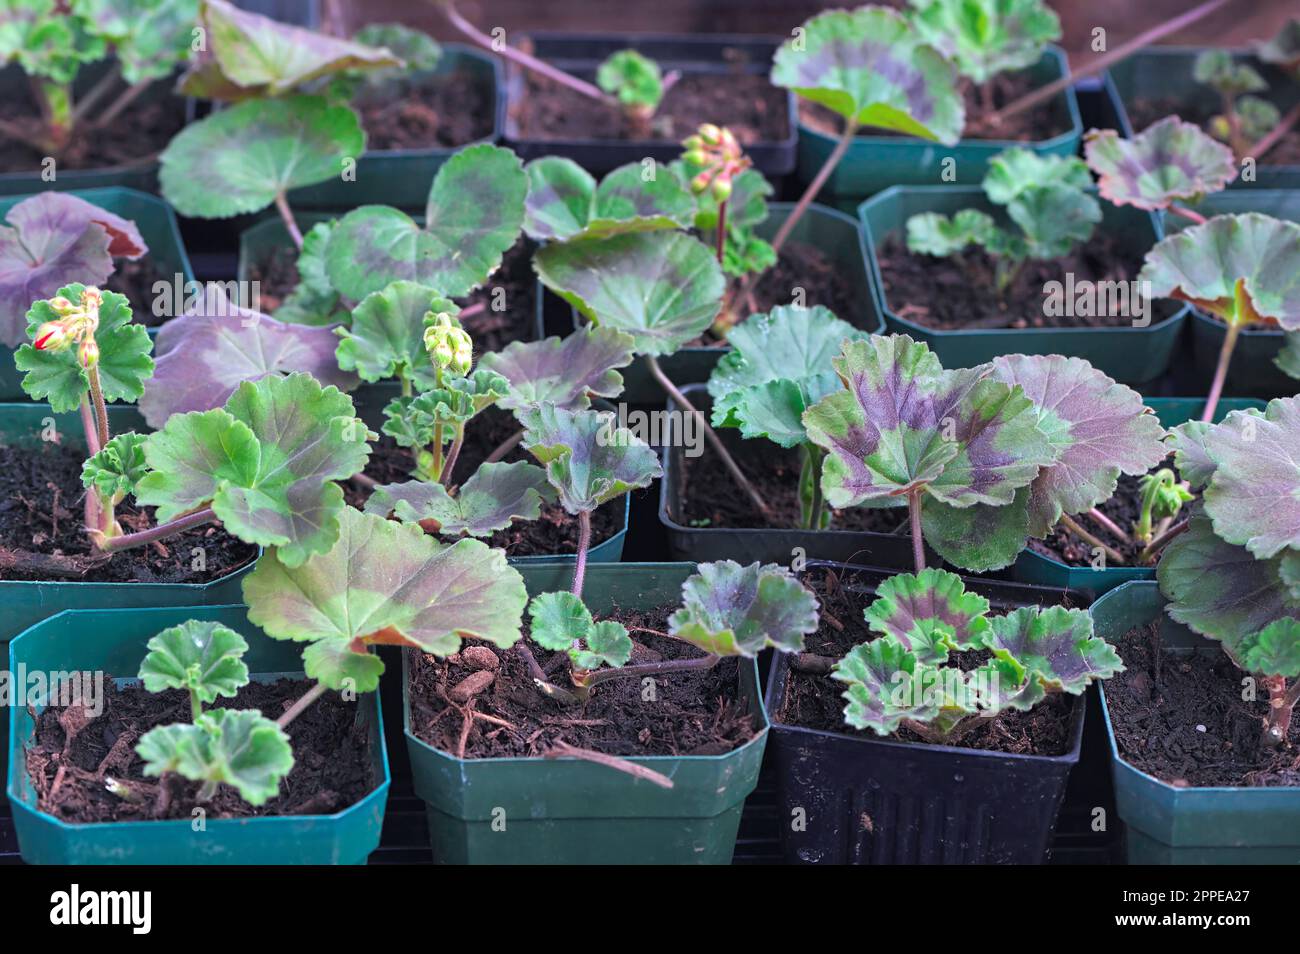 Pelargonium x hortorum - zonal or garden geraniums - cuttings or slips potted up in a greenhouse. B. C., Canada. Stock Photo